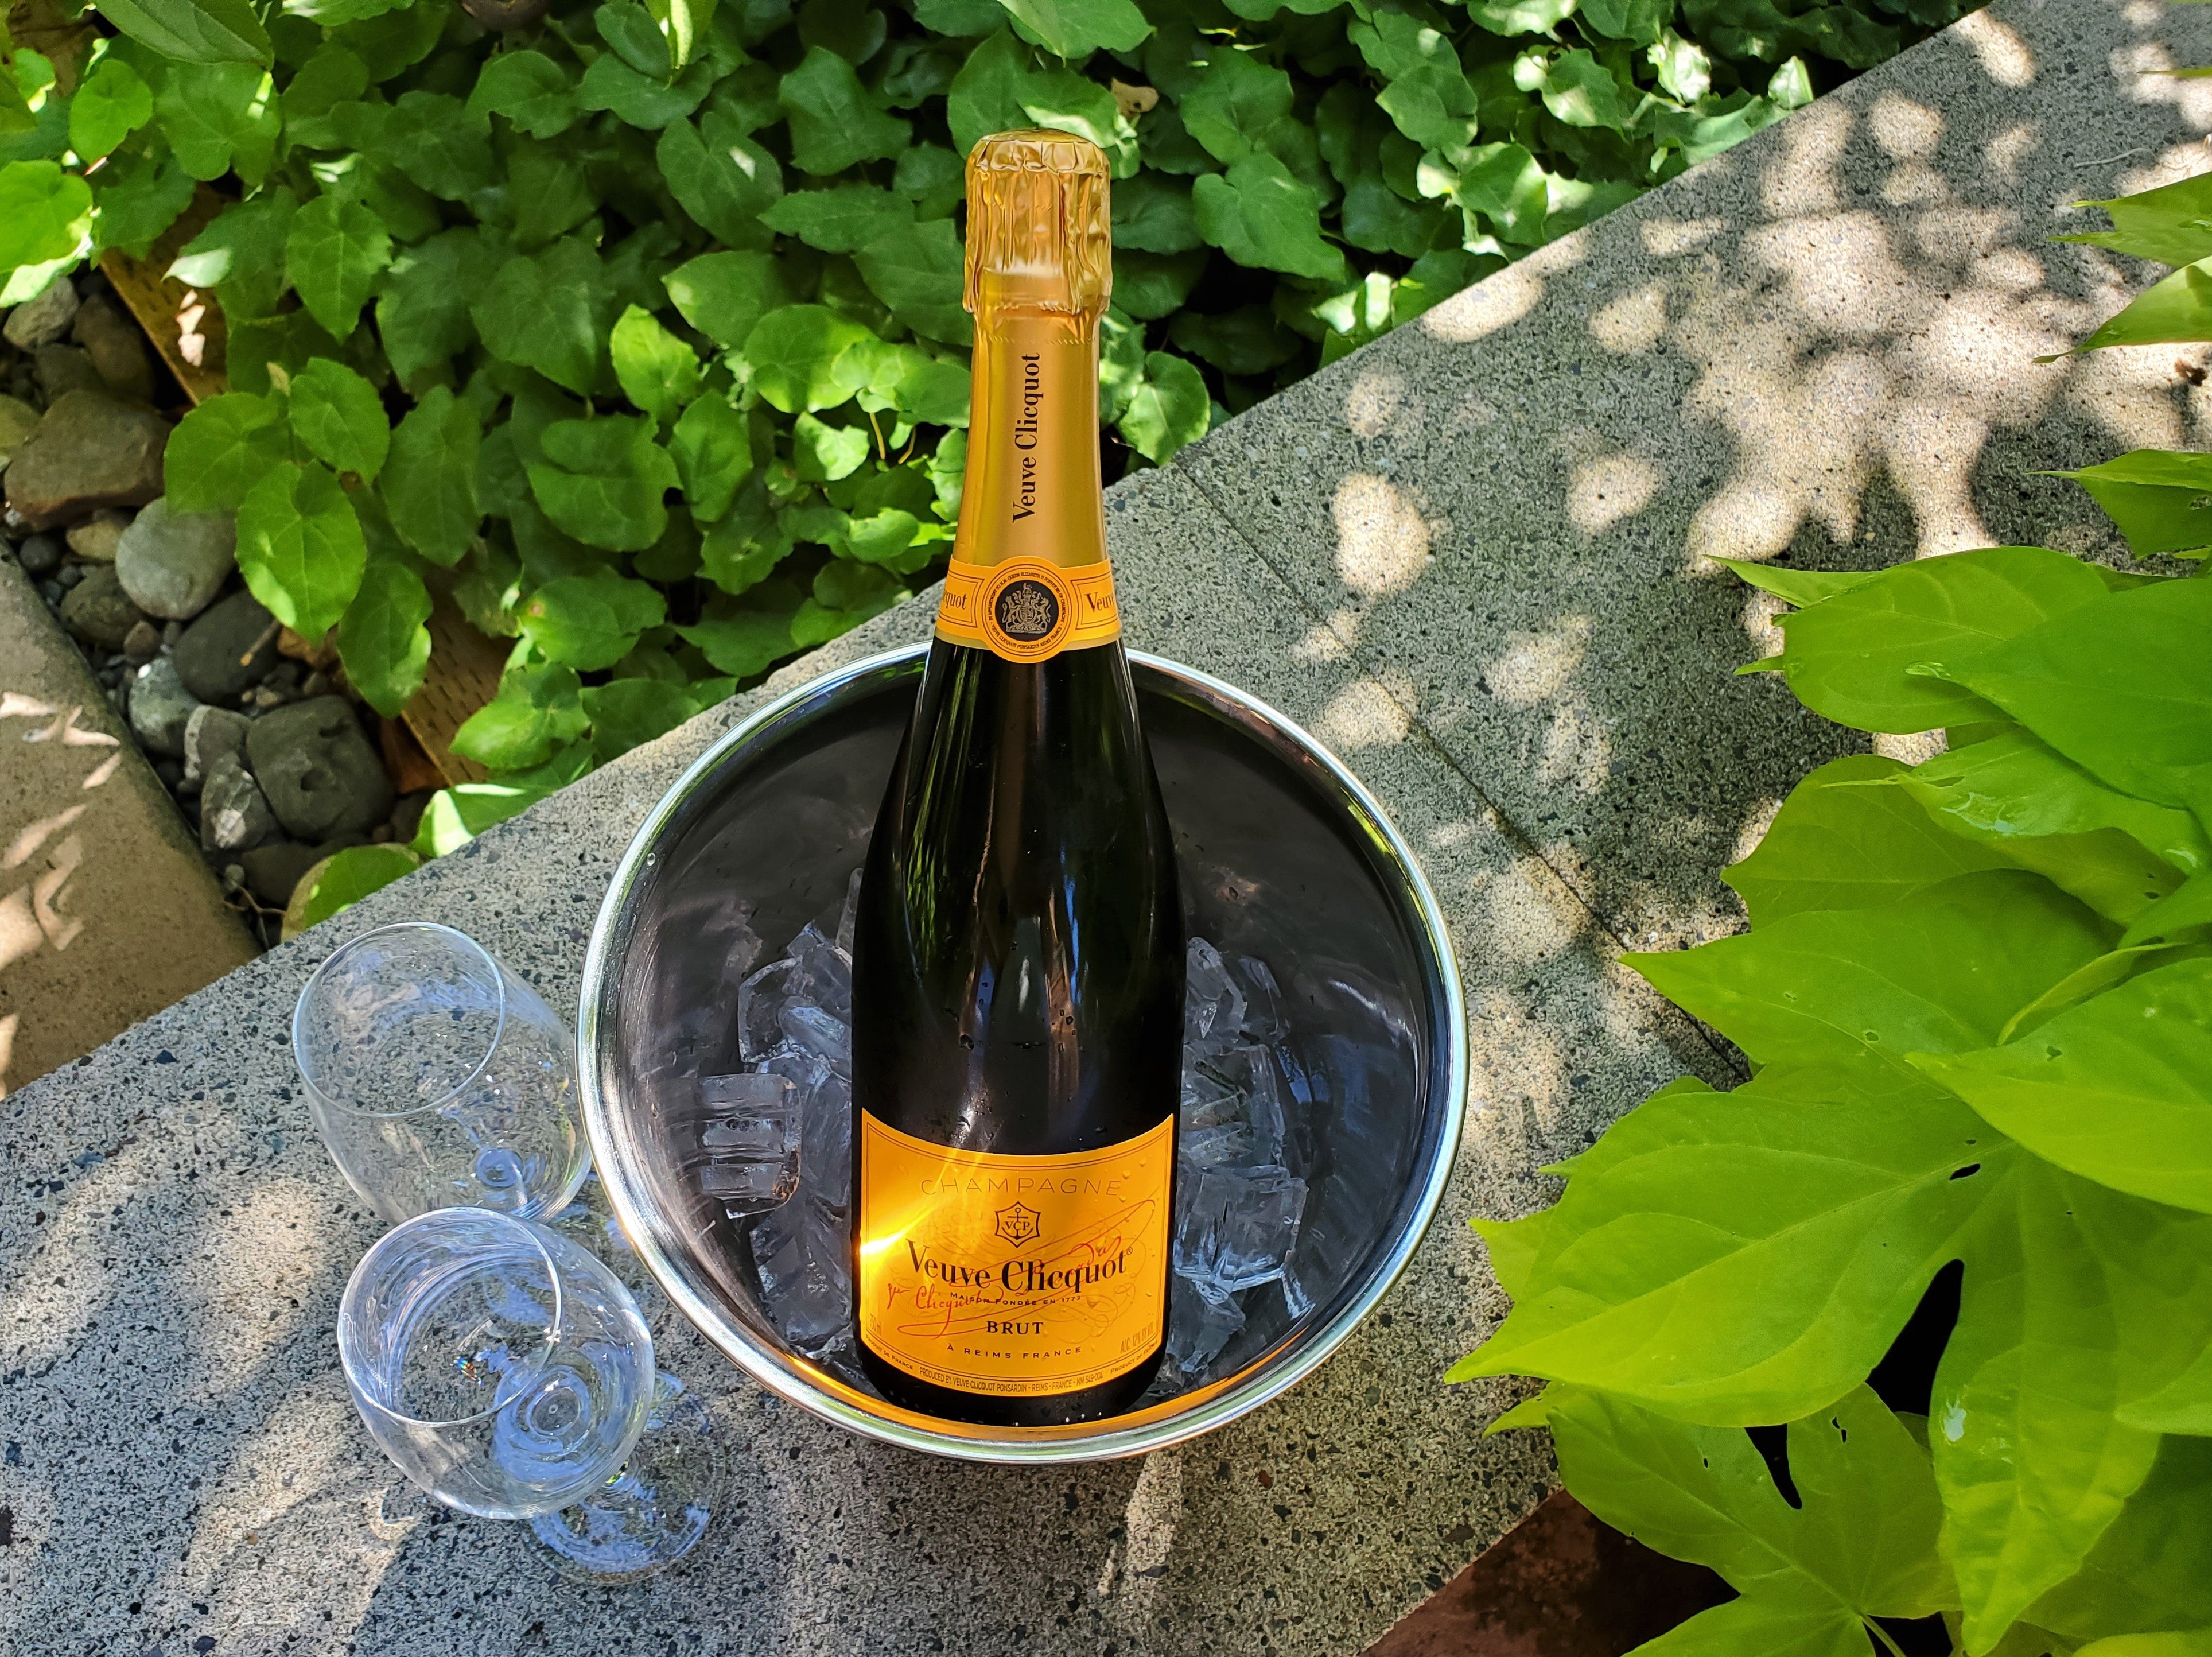 Veuve Clicquot Yellow Label Brut Champagne - Champagne delivered